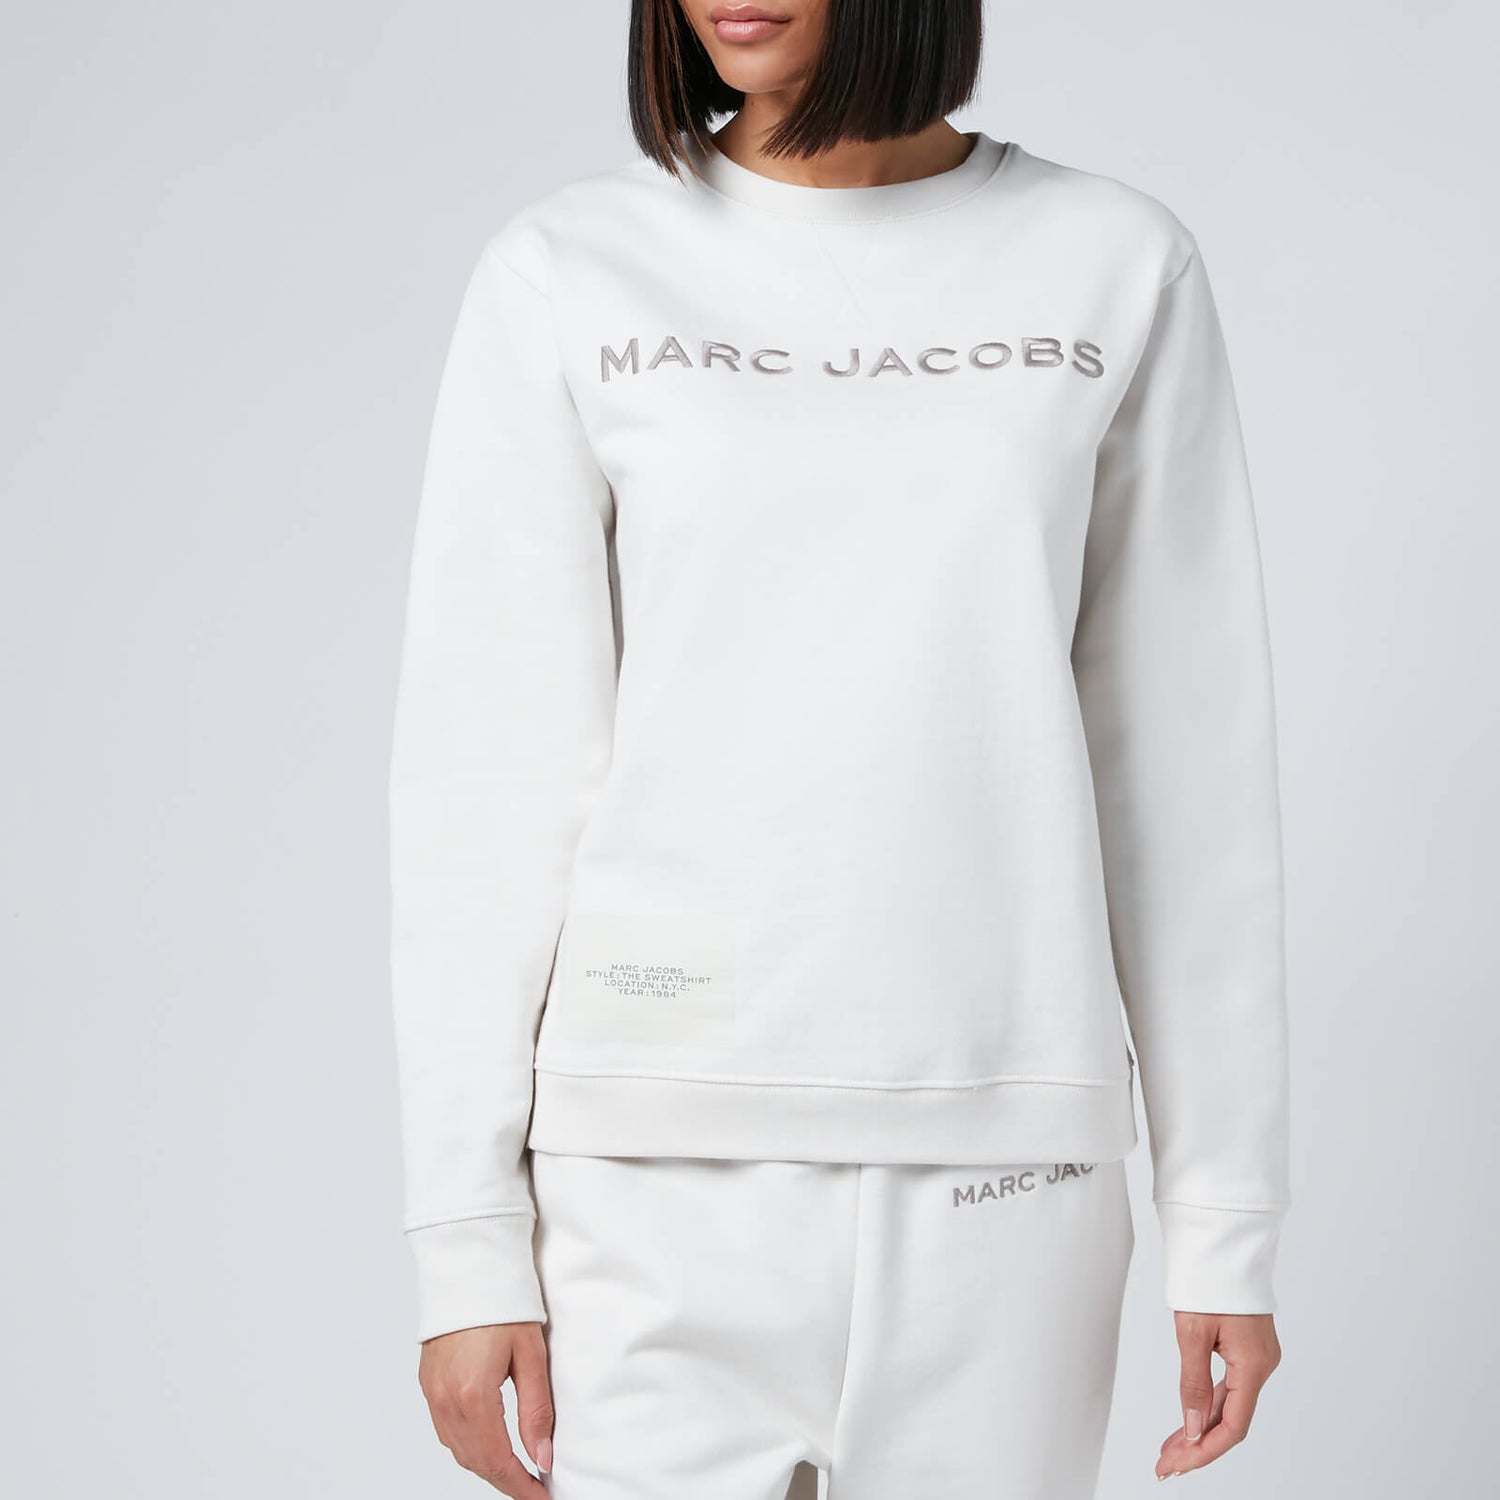 Marc Jacobs Women's The Sweatshirt - Chalk - XS